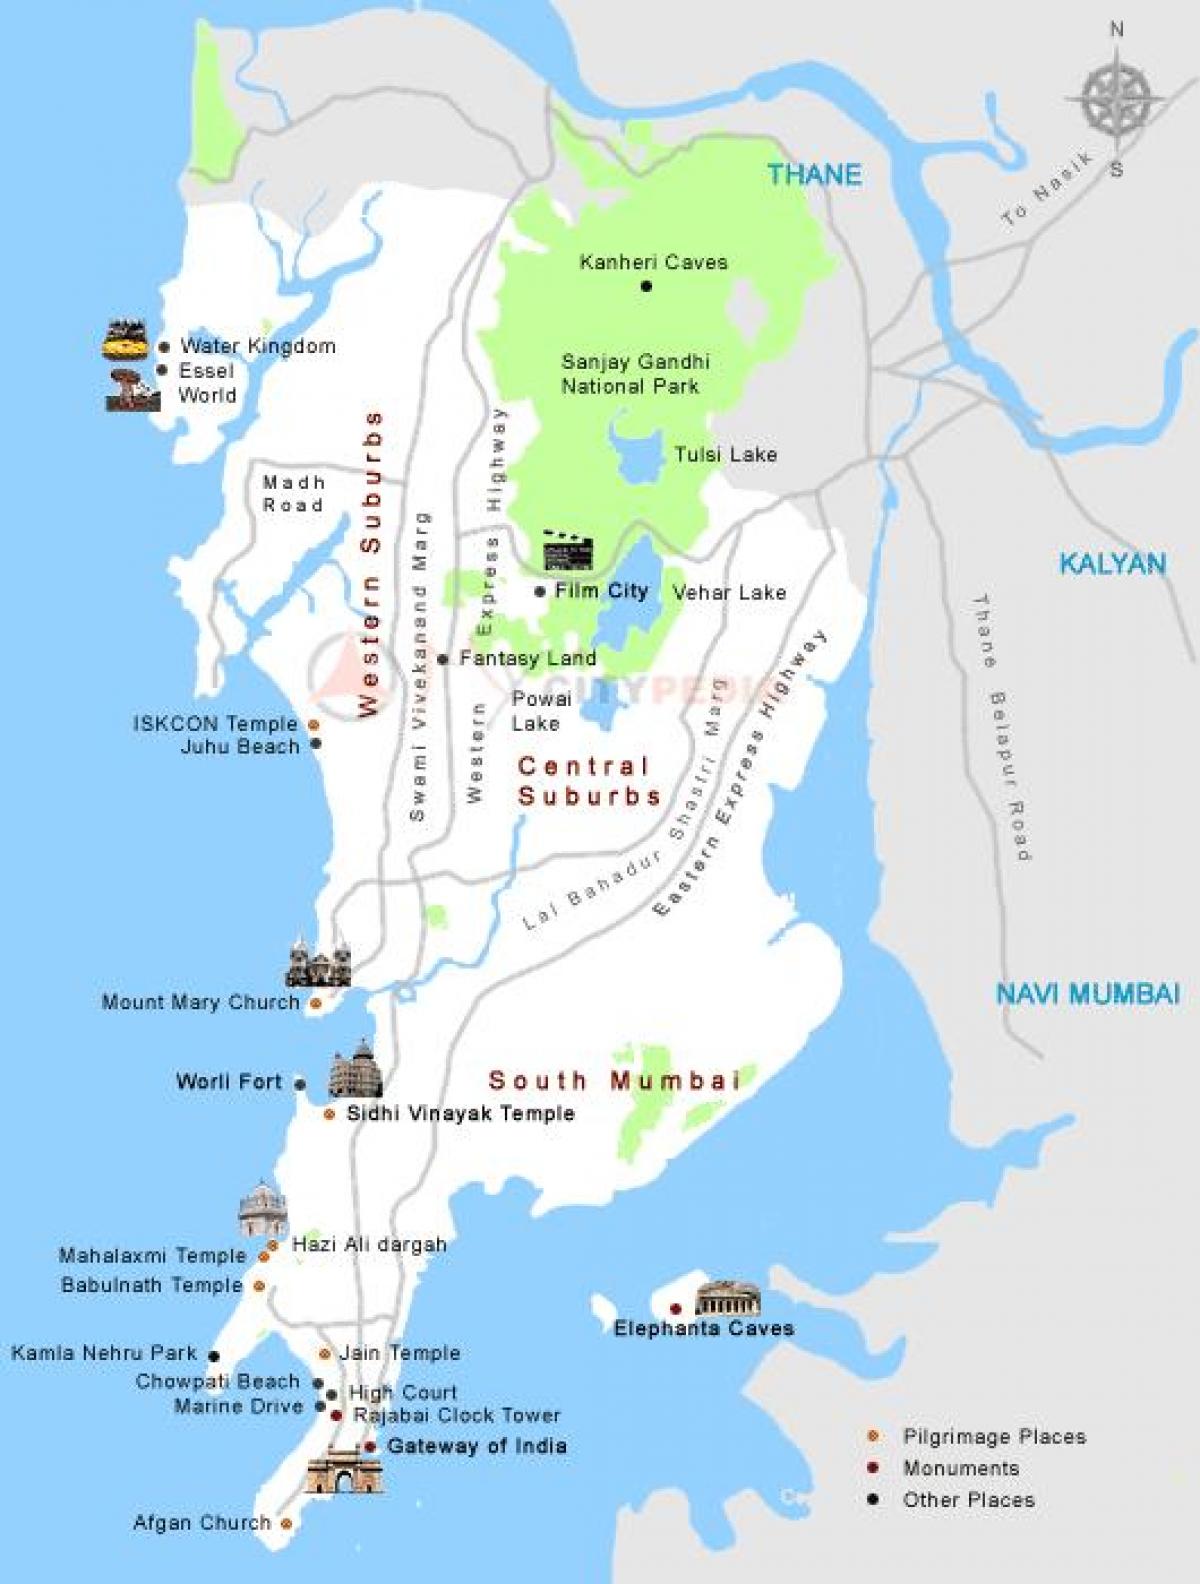 Mumbai darshan helyek térképen